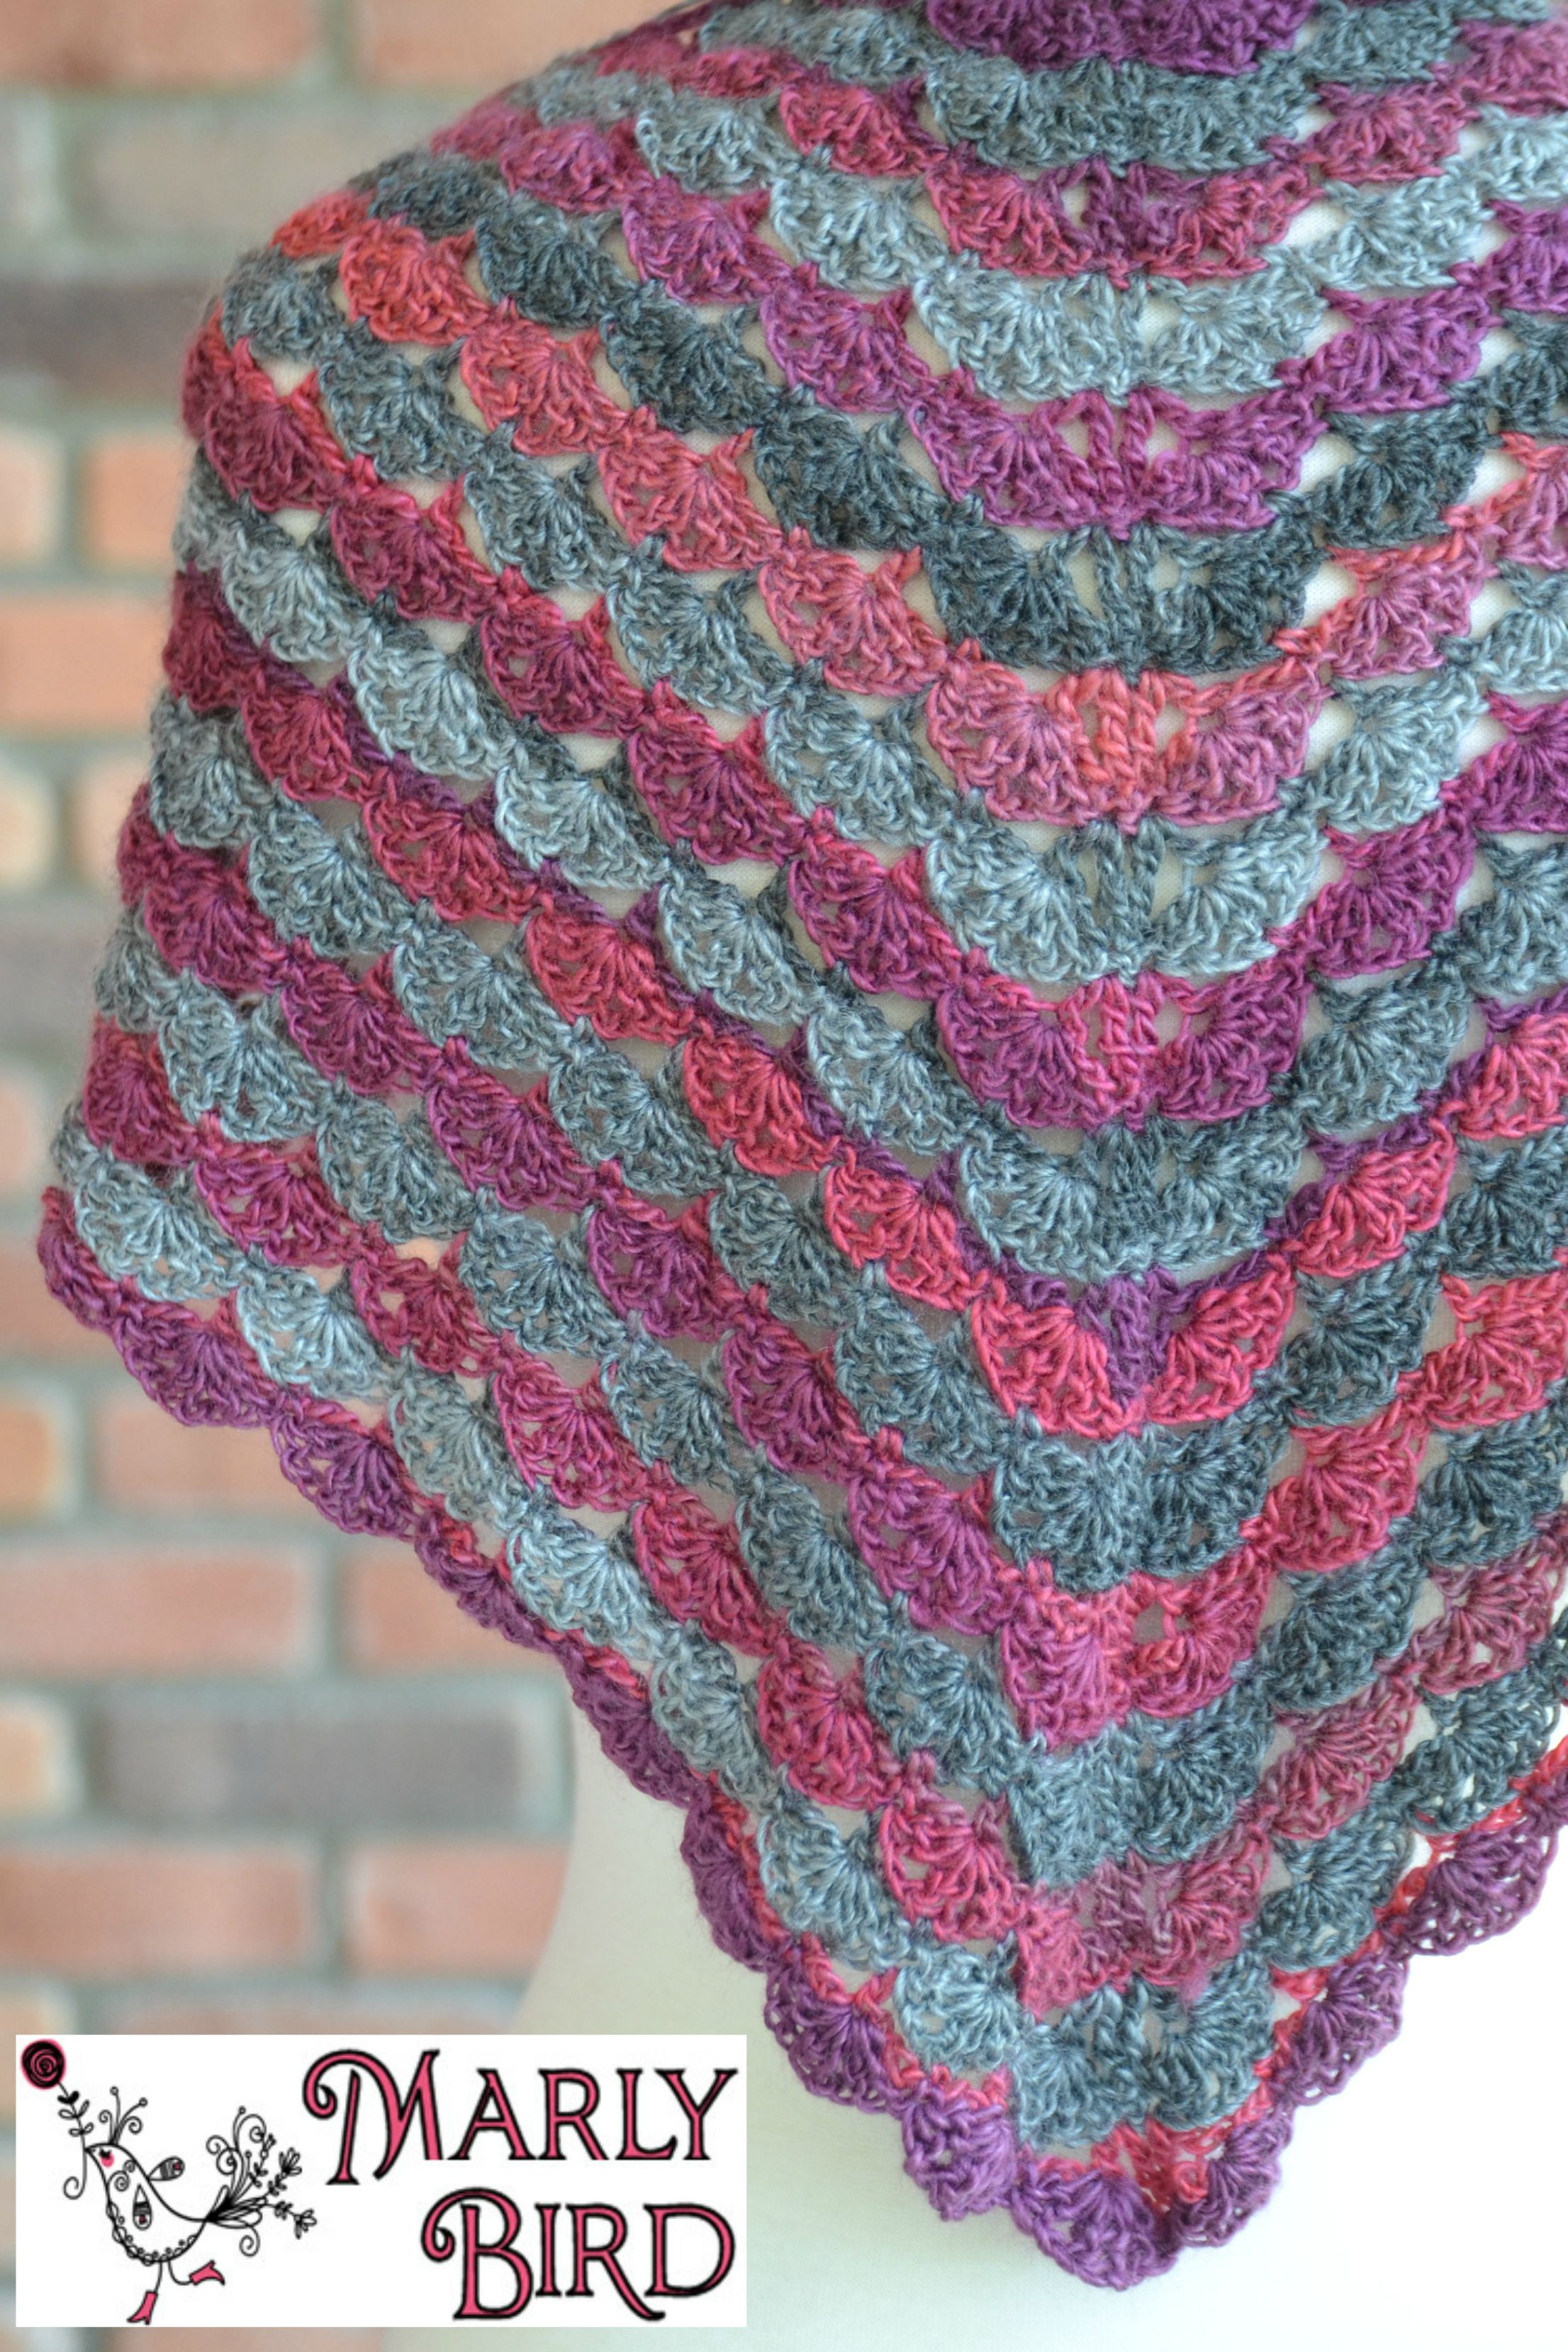 Free Shawl Crochet Patterns Find The Best Free Crochet Shawl Patterns Crochet And Knitting